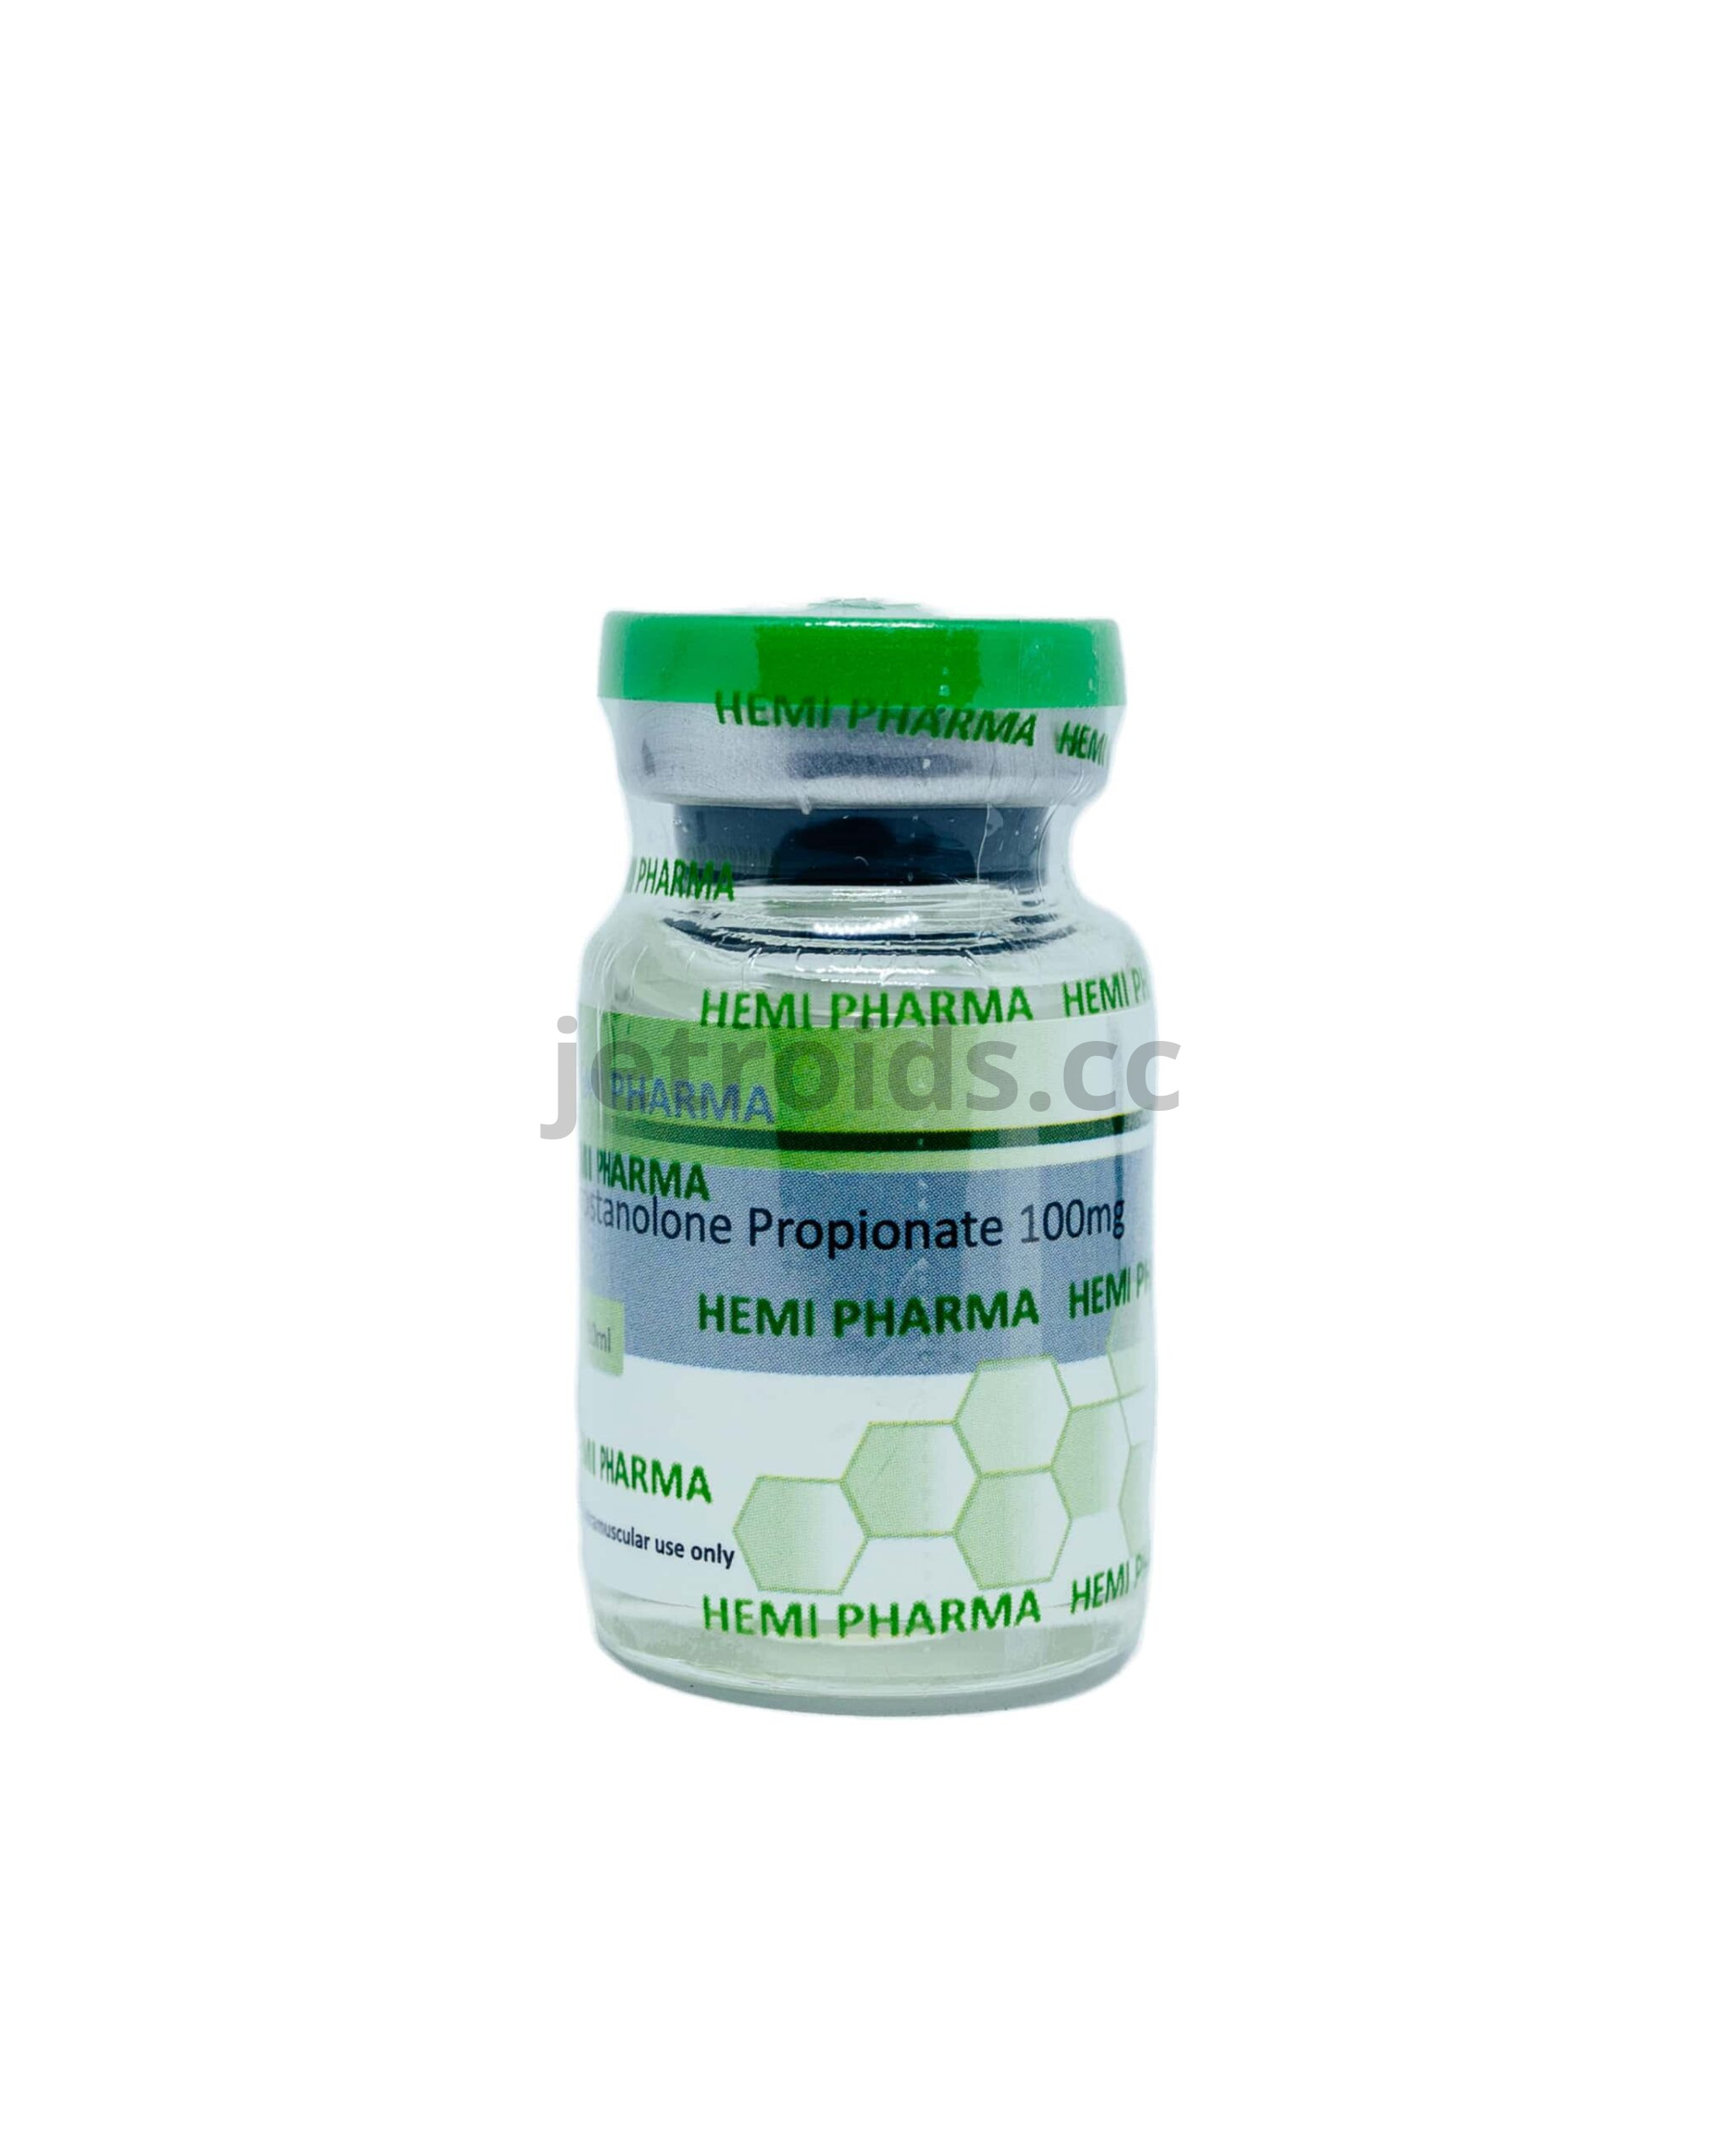 Hemi Pharma Drostanolone Propionate 100 Product Info